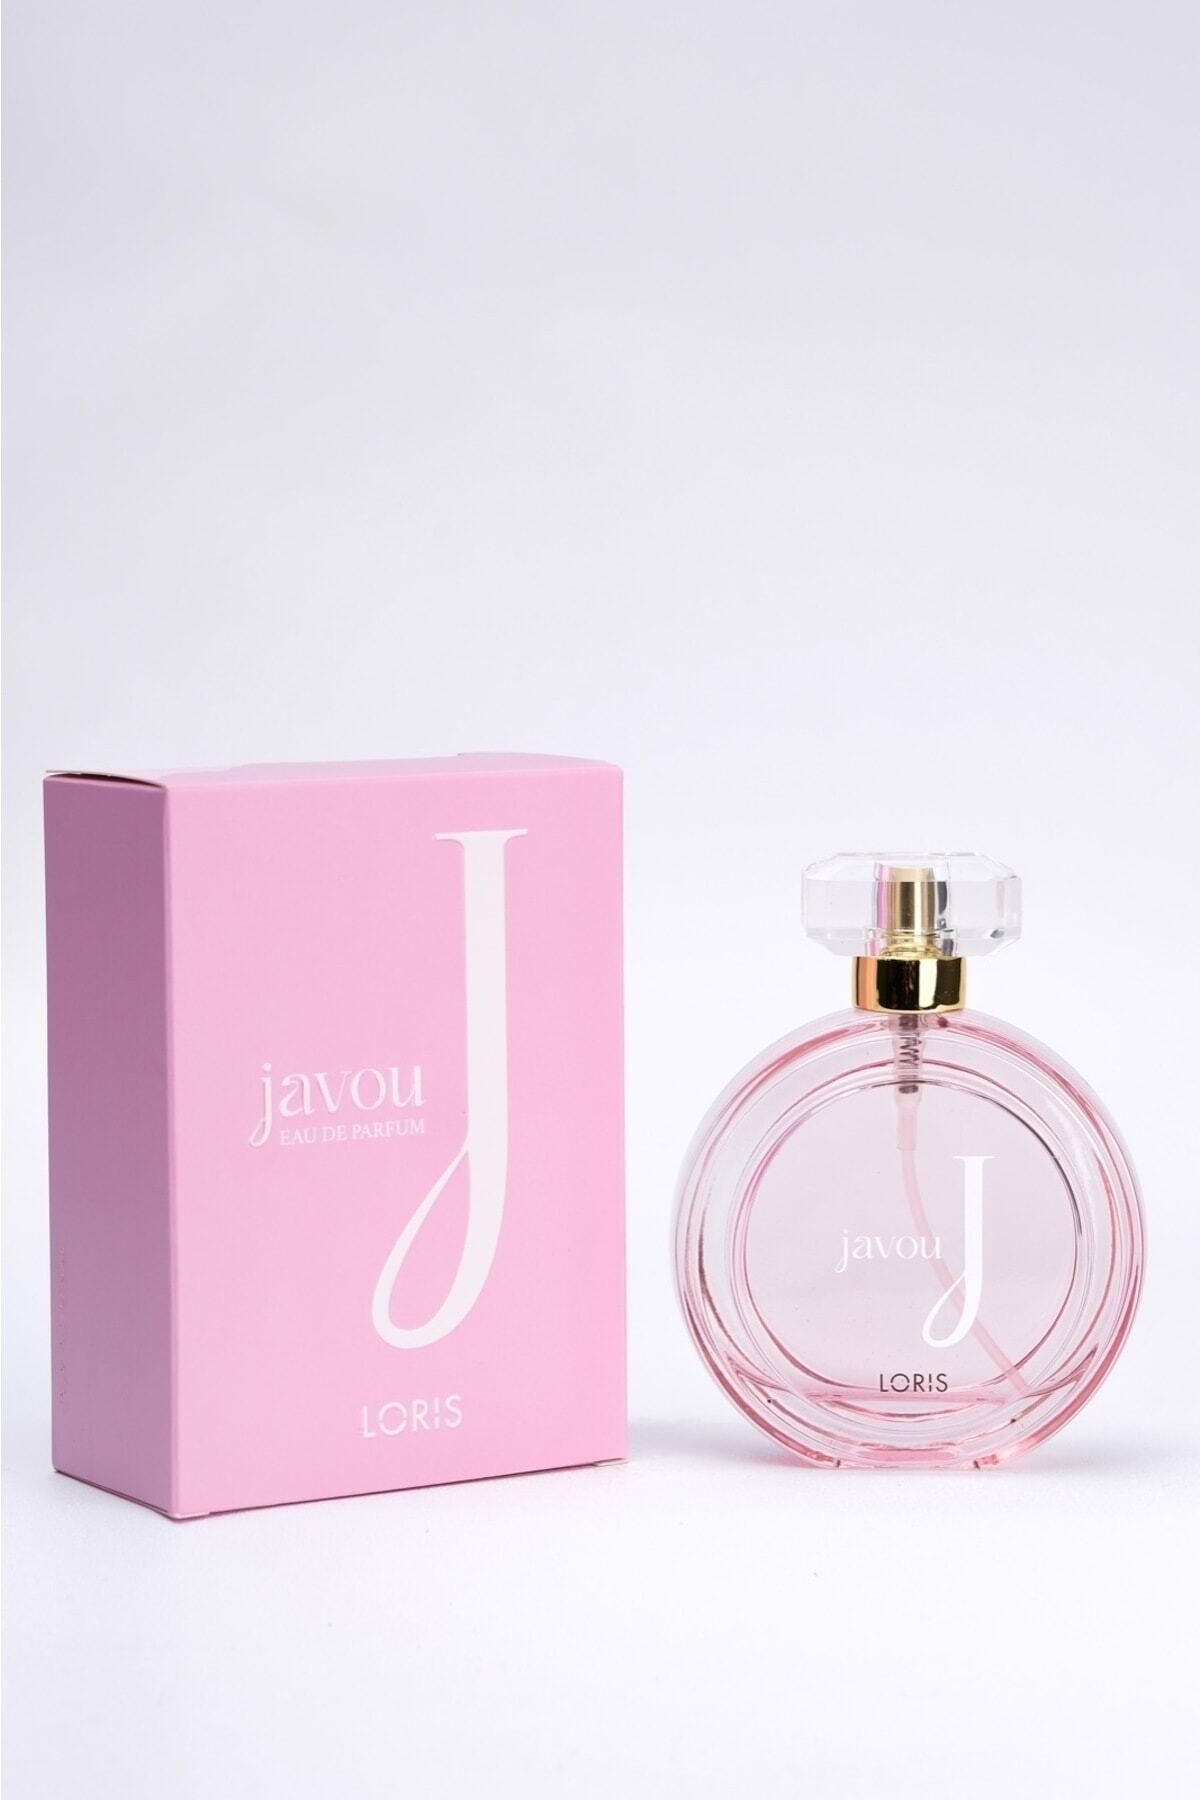 Loris Javou Midnight Parfume Edp 100ml Kadın Parfüm